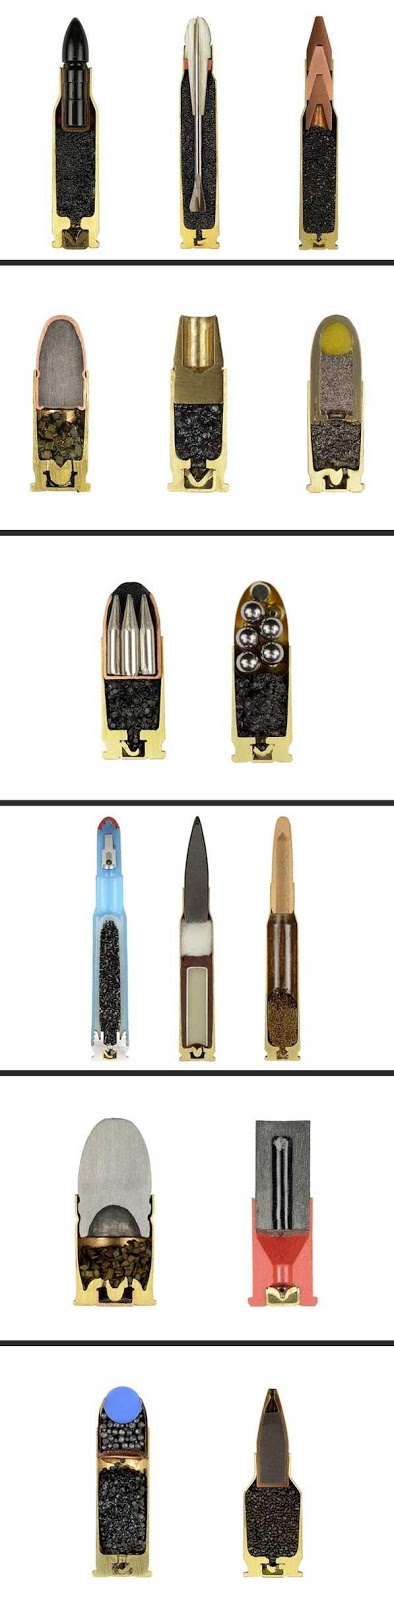 Cutaway Views of Various Ammunition Cartridges